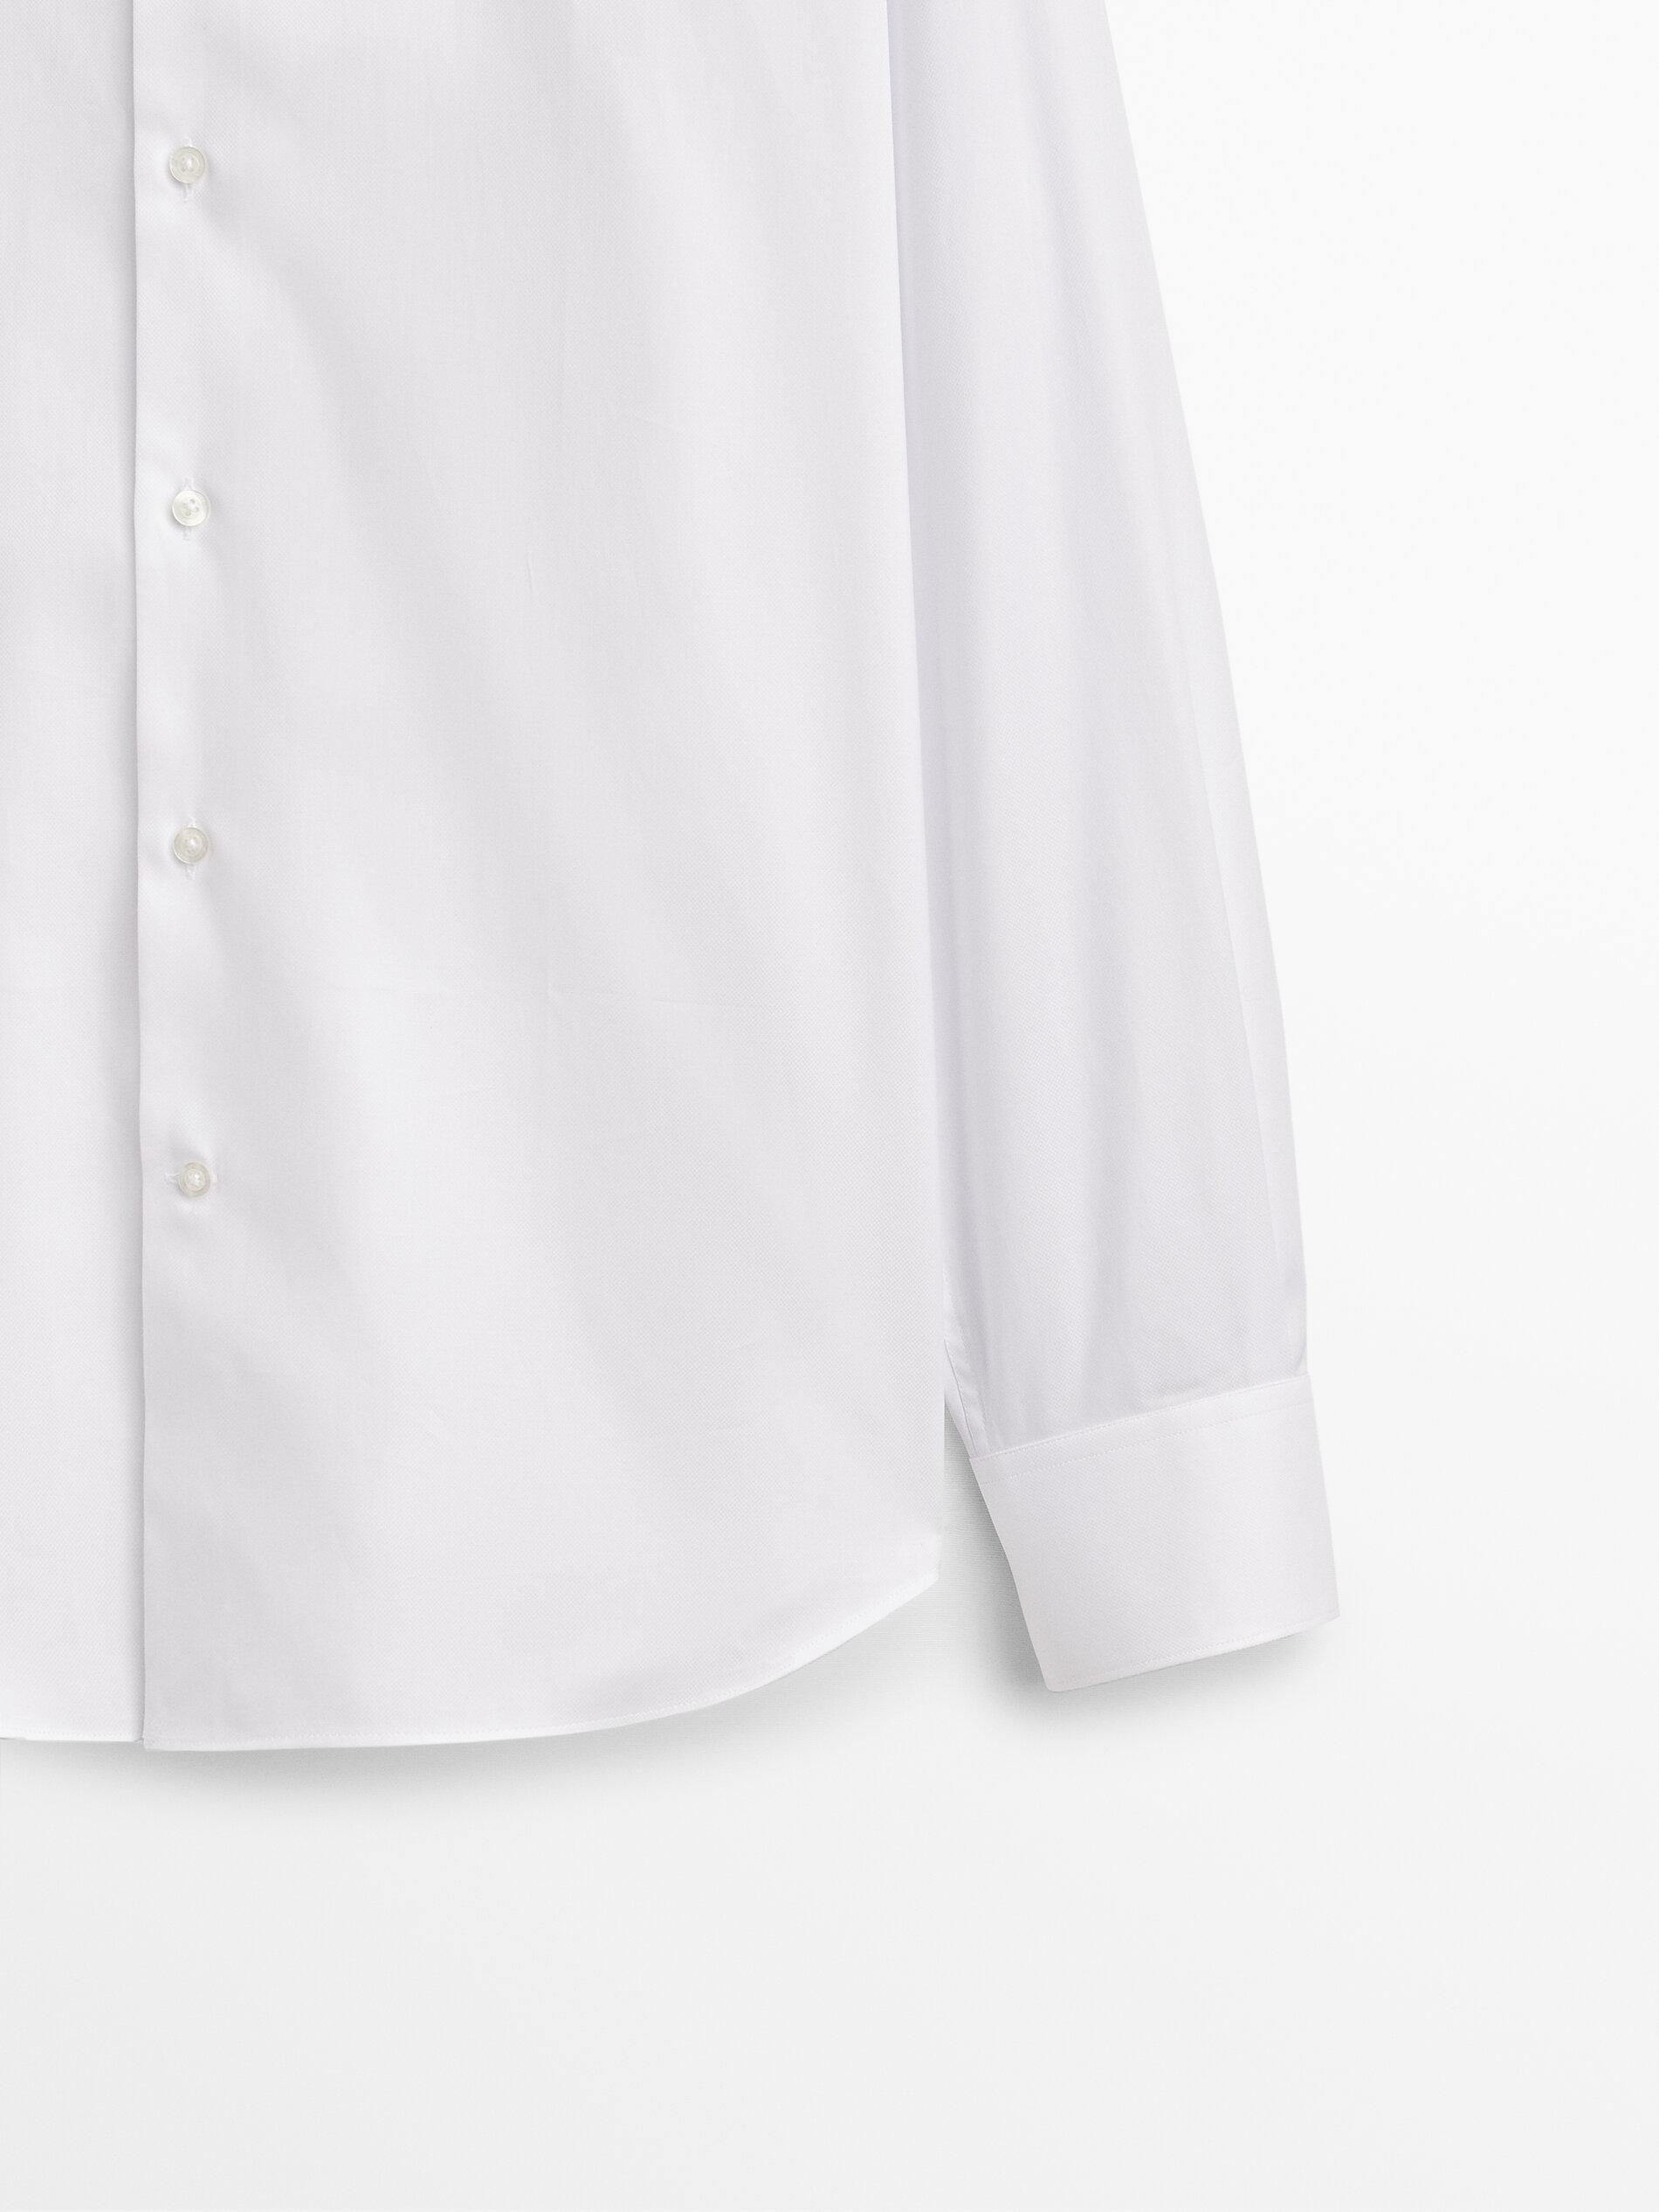 Slim fit textured cotton shirt - Massimo Dutti United States of 